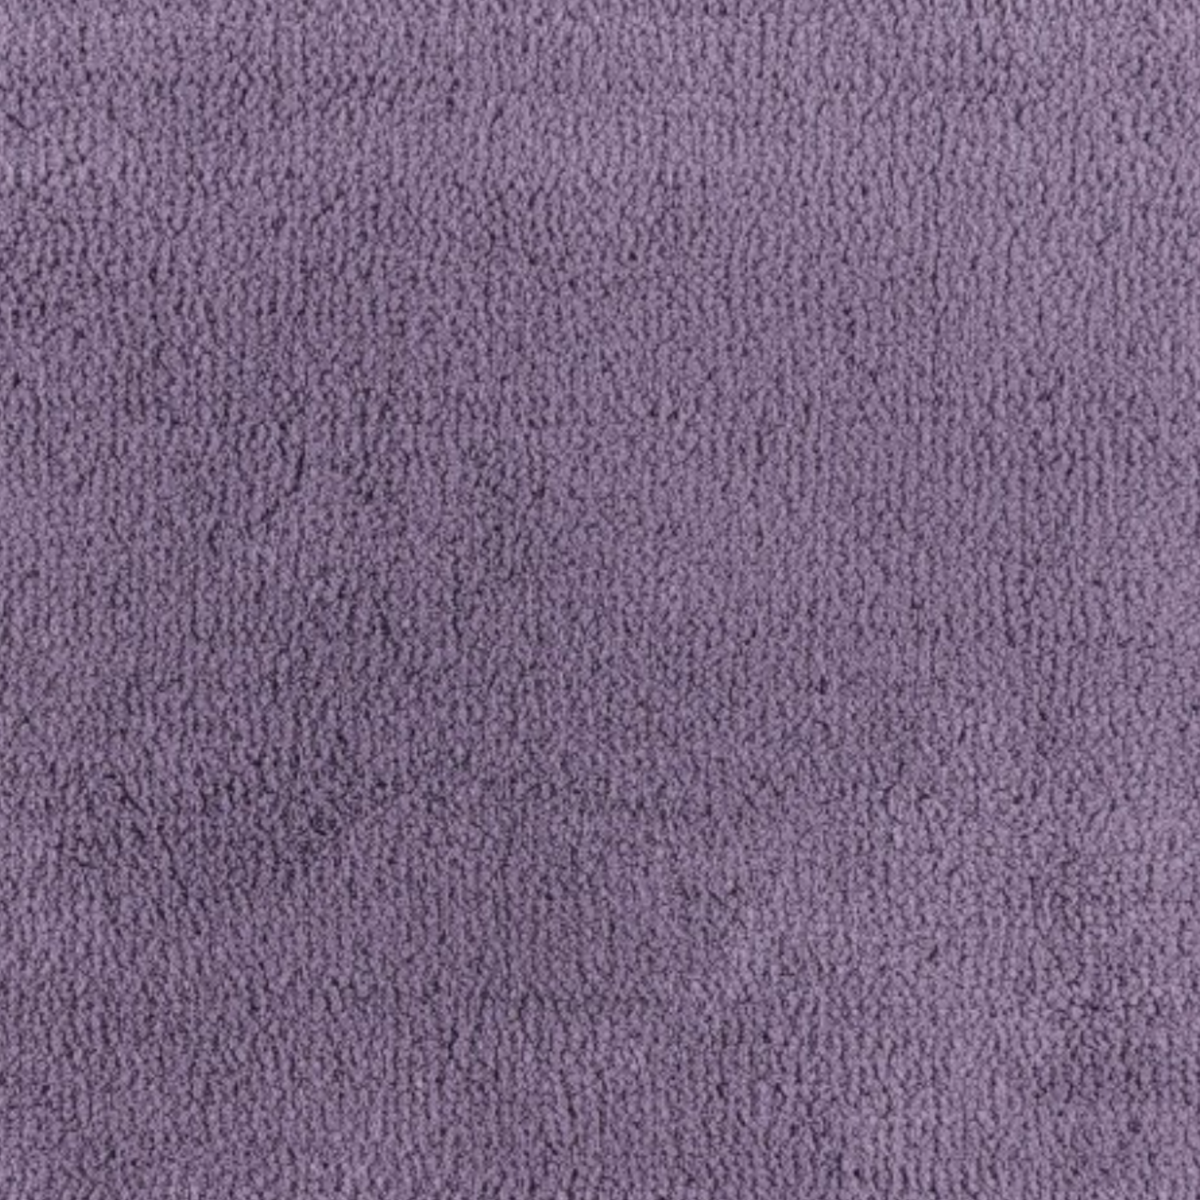 Fabric Closeup of Graccioza Cool Bath Rugs Lavander Color